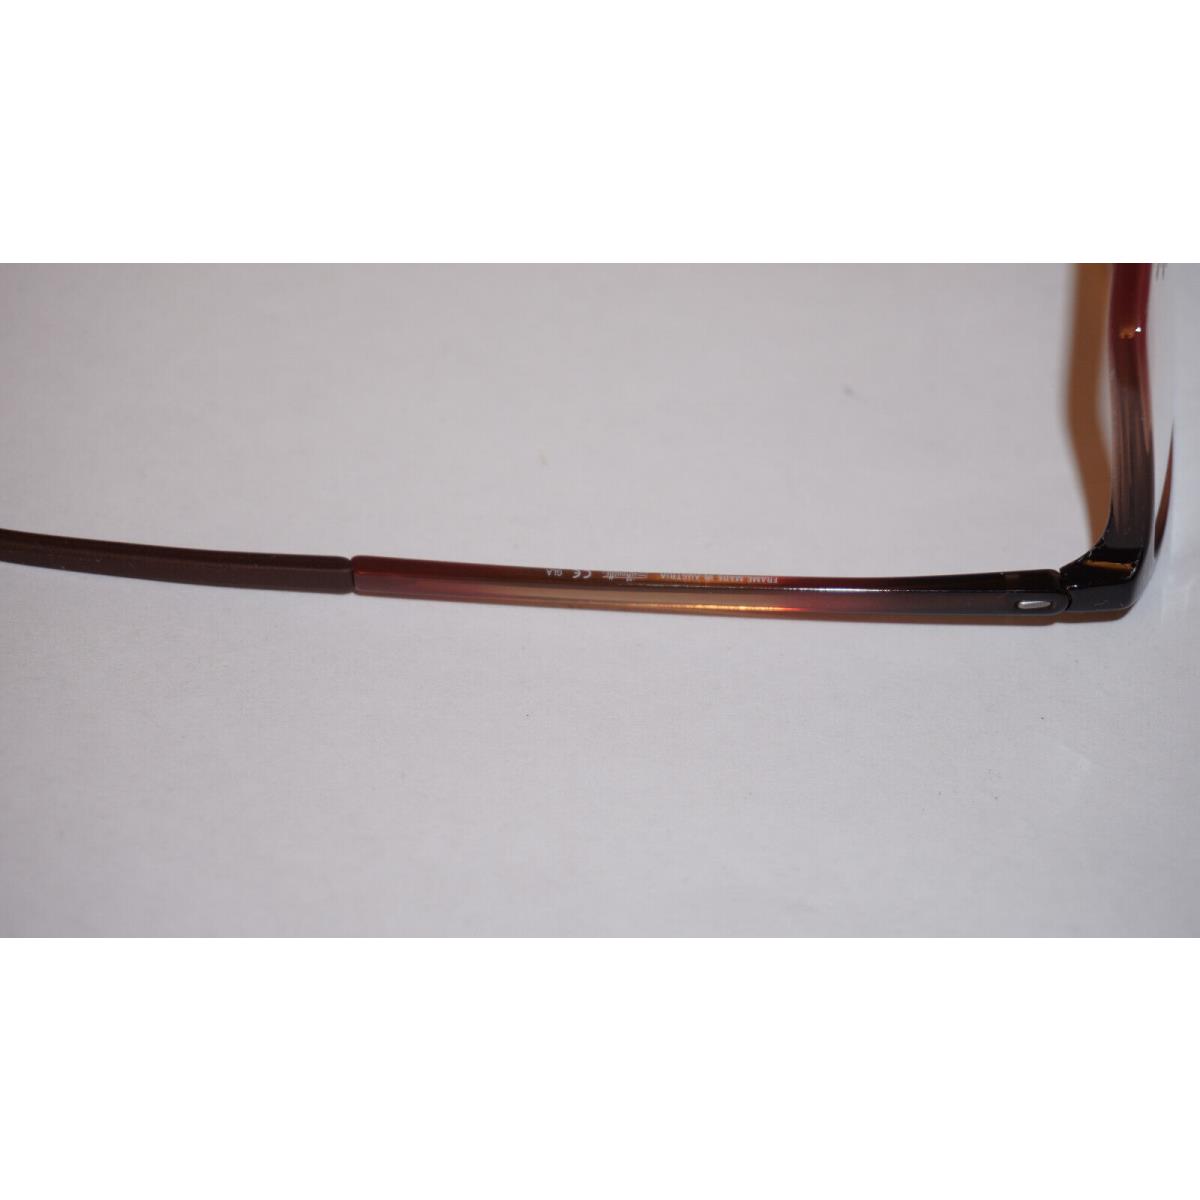 Silhouette RX Eyeglasses Brown Spx 2893 10 6122 56 15 145